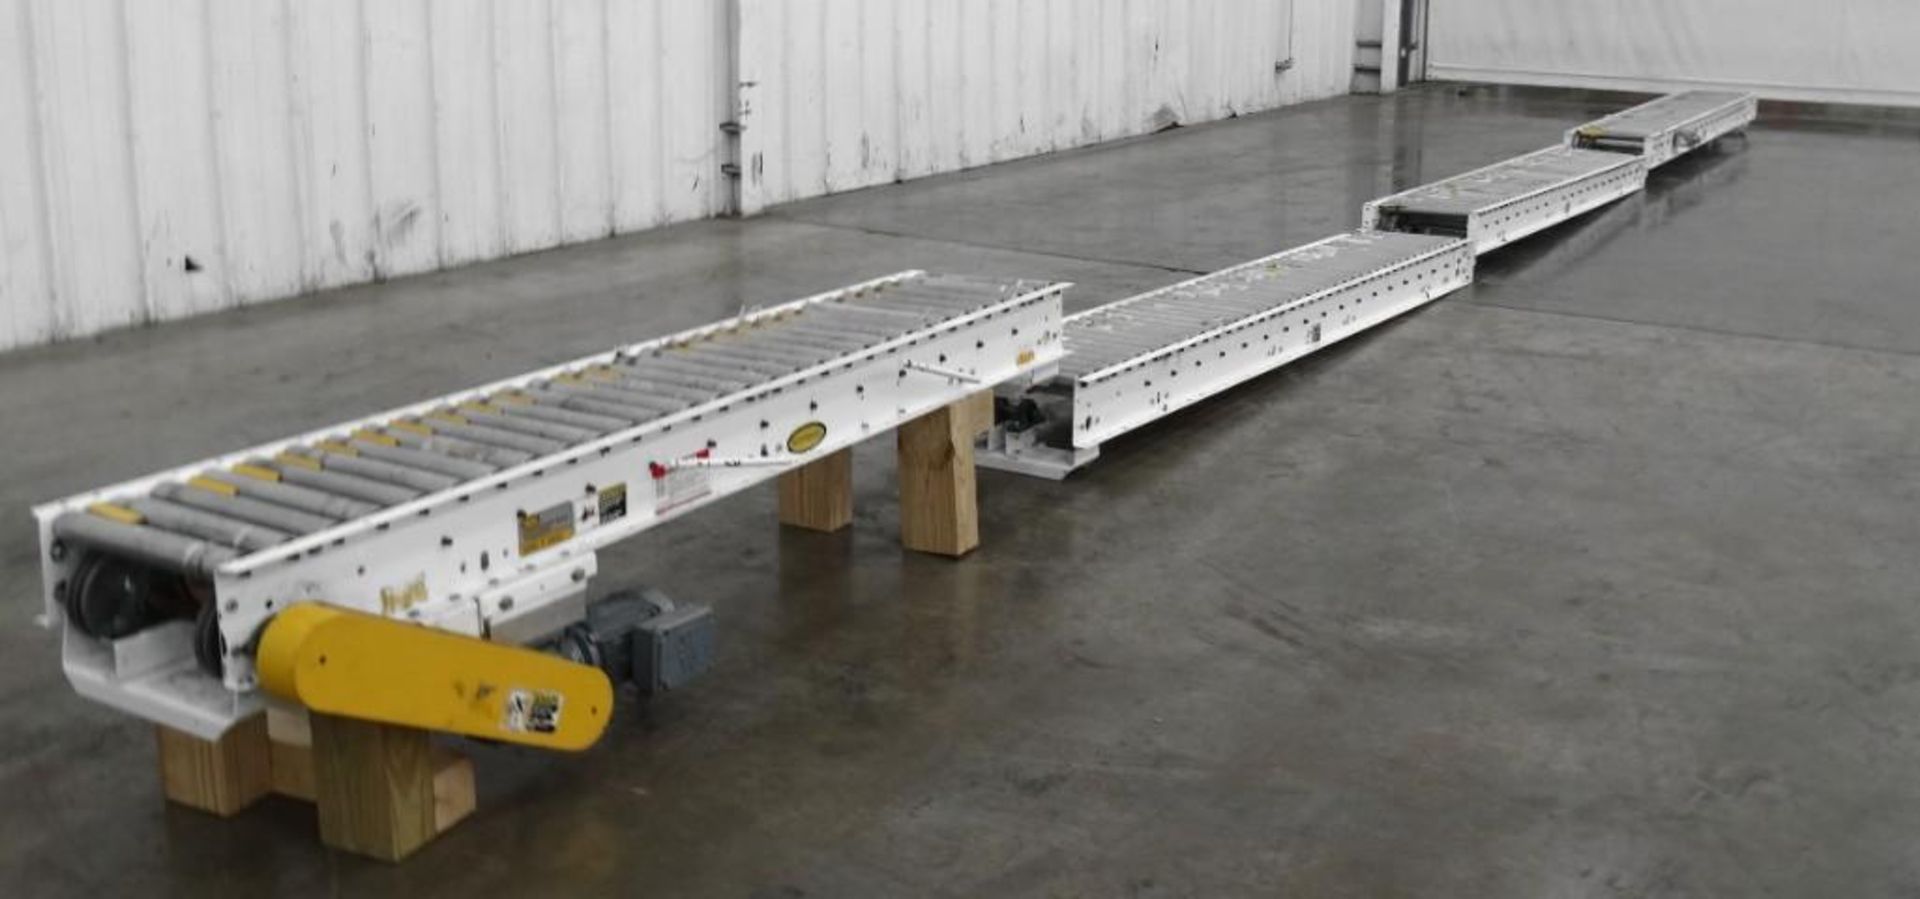 Hytrol 37.5' Long x 15" Wide Roller Conveyor - Image 2 of 6